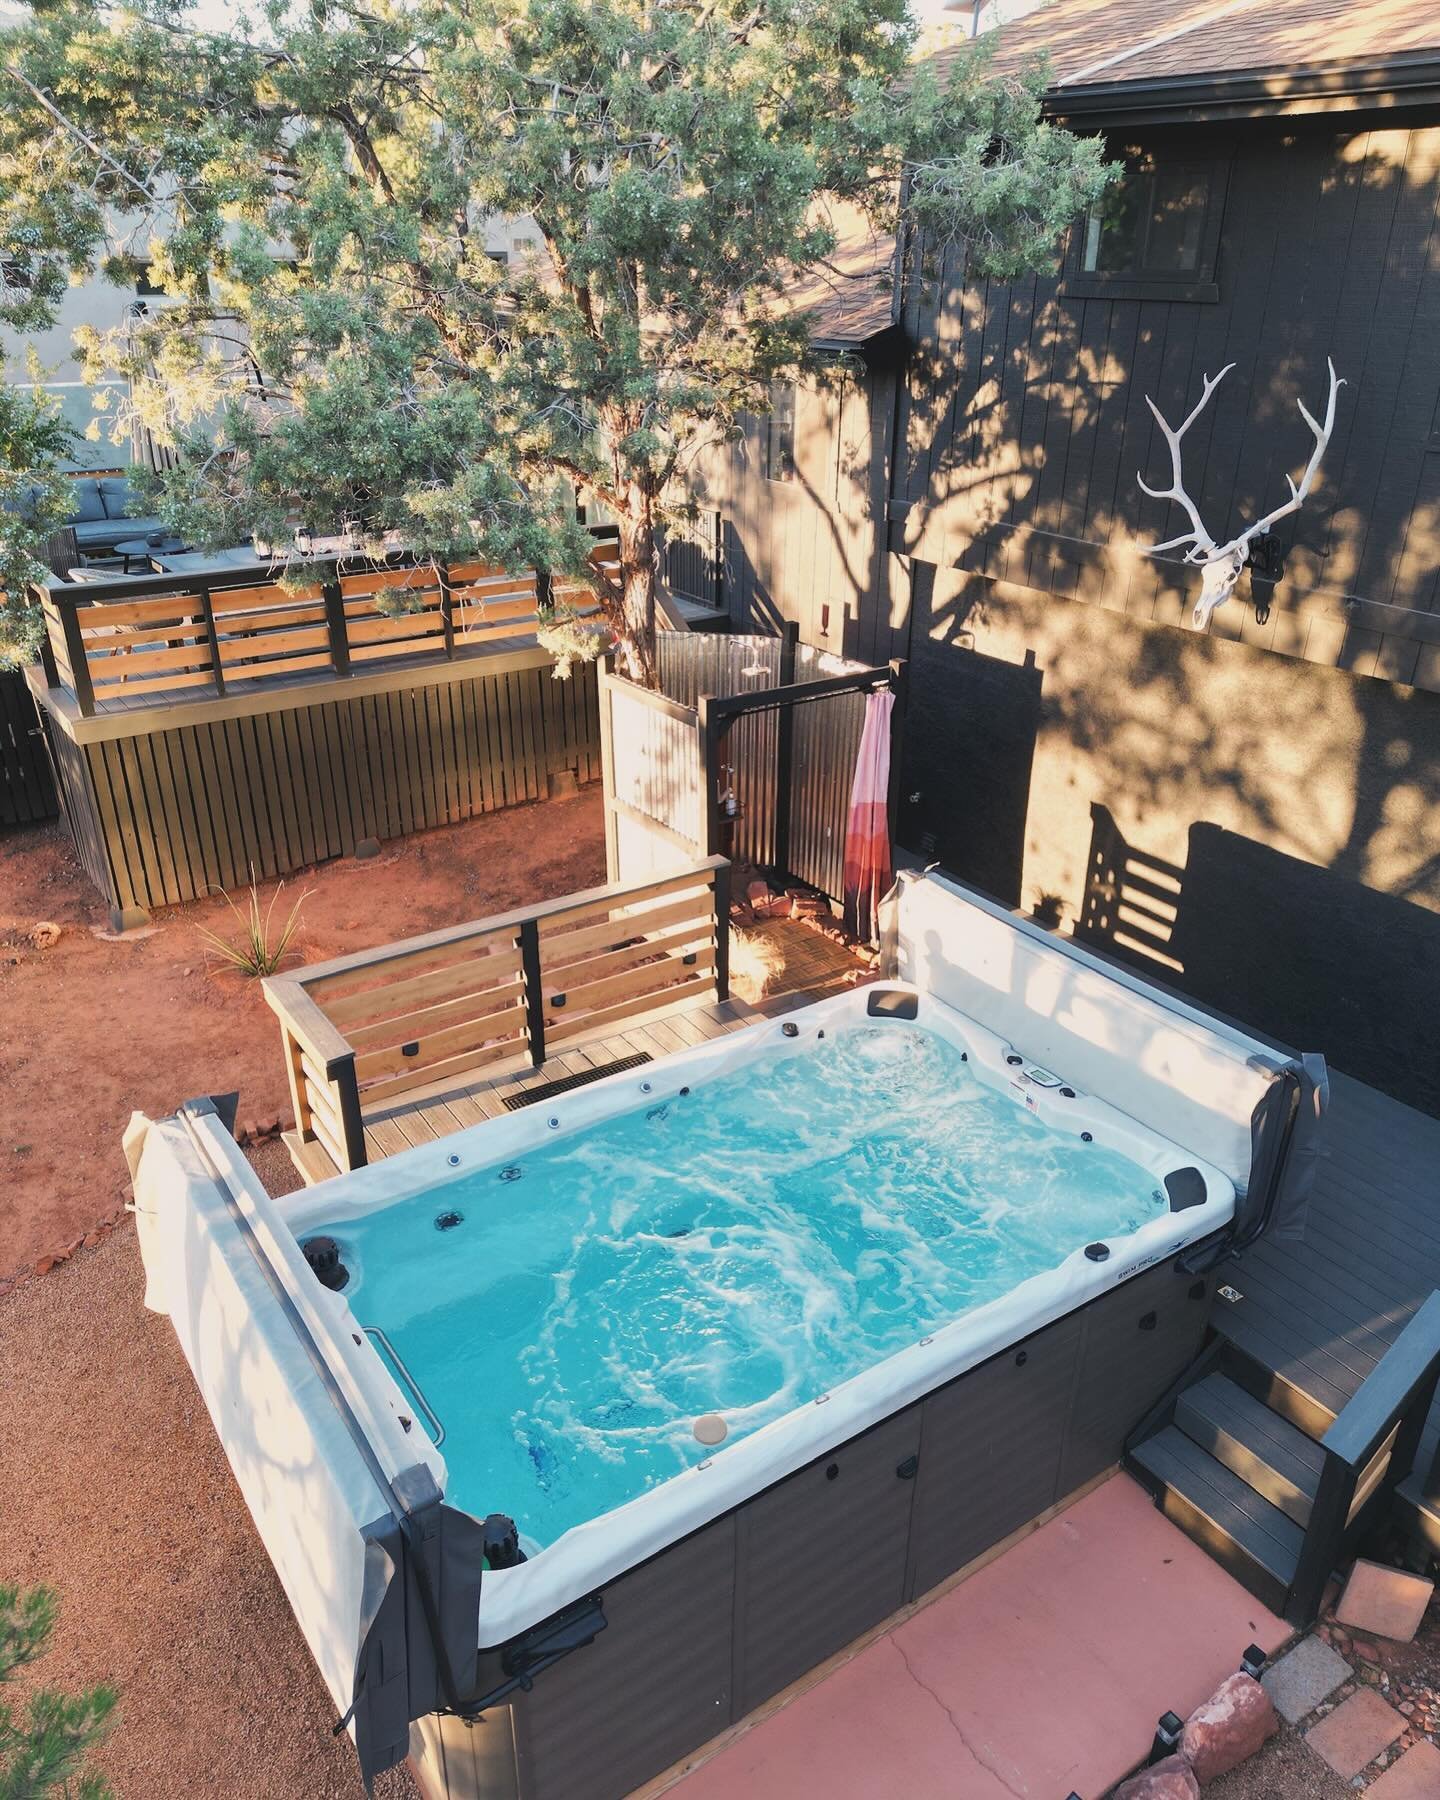 Who is ready for a dip?  #sedona #arizona #swimspa #airbnbsuperhost #airbnb #sedonaaz  Photo: @bradsterw